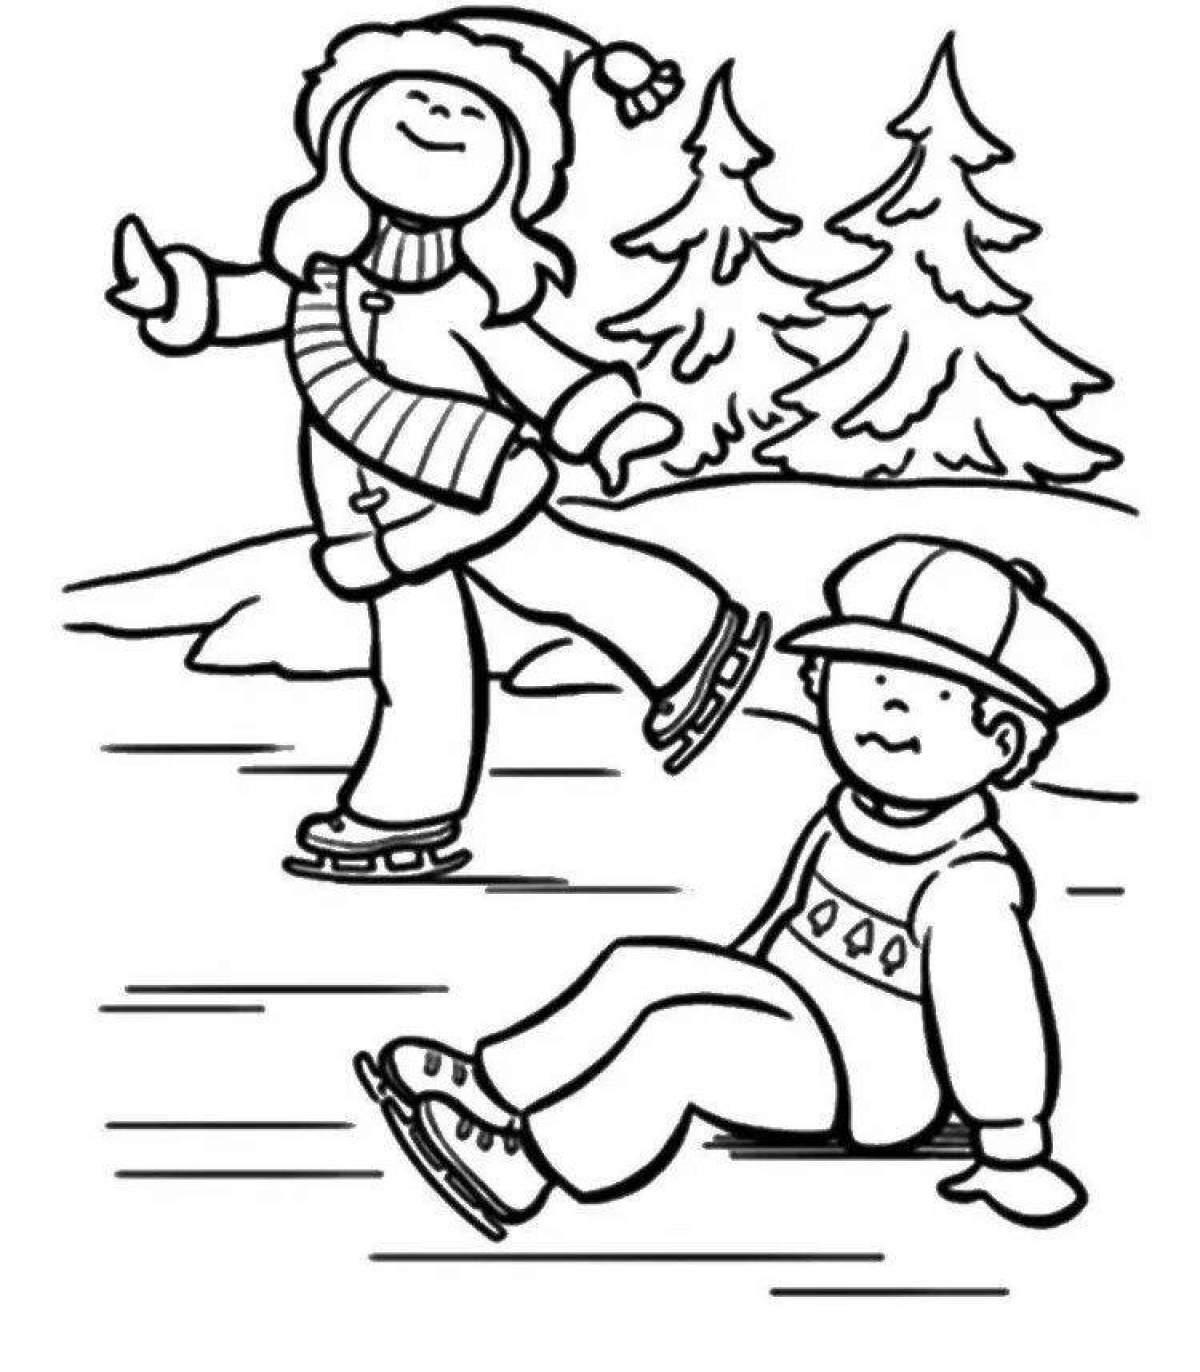 Children playing in winter